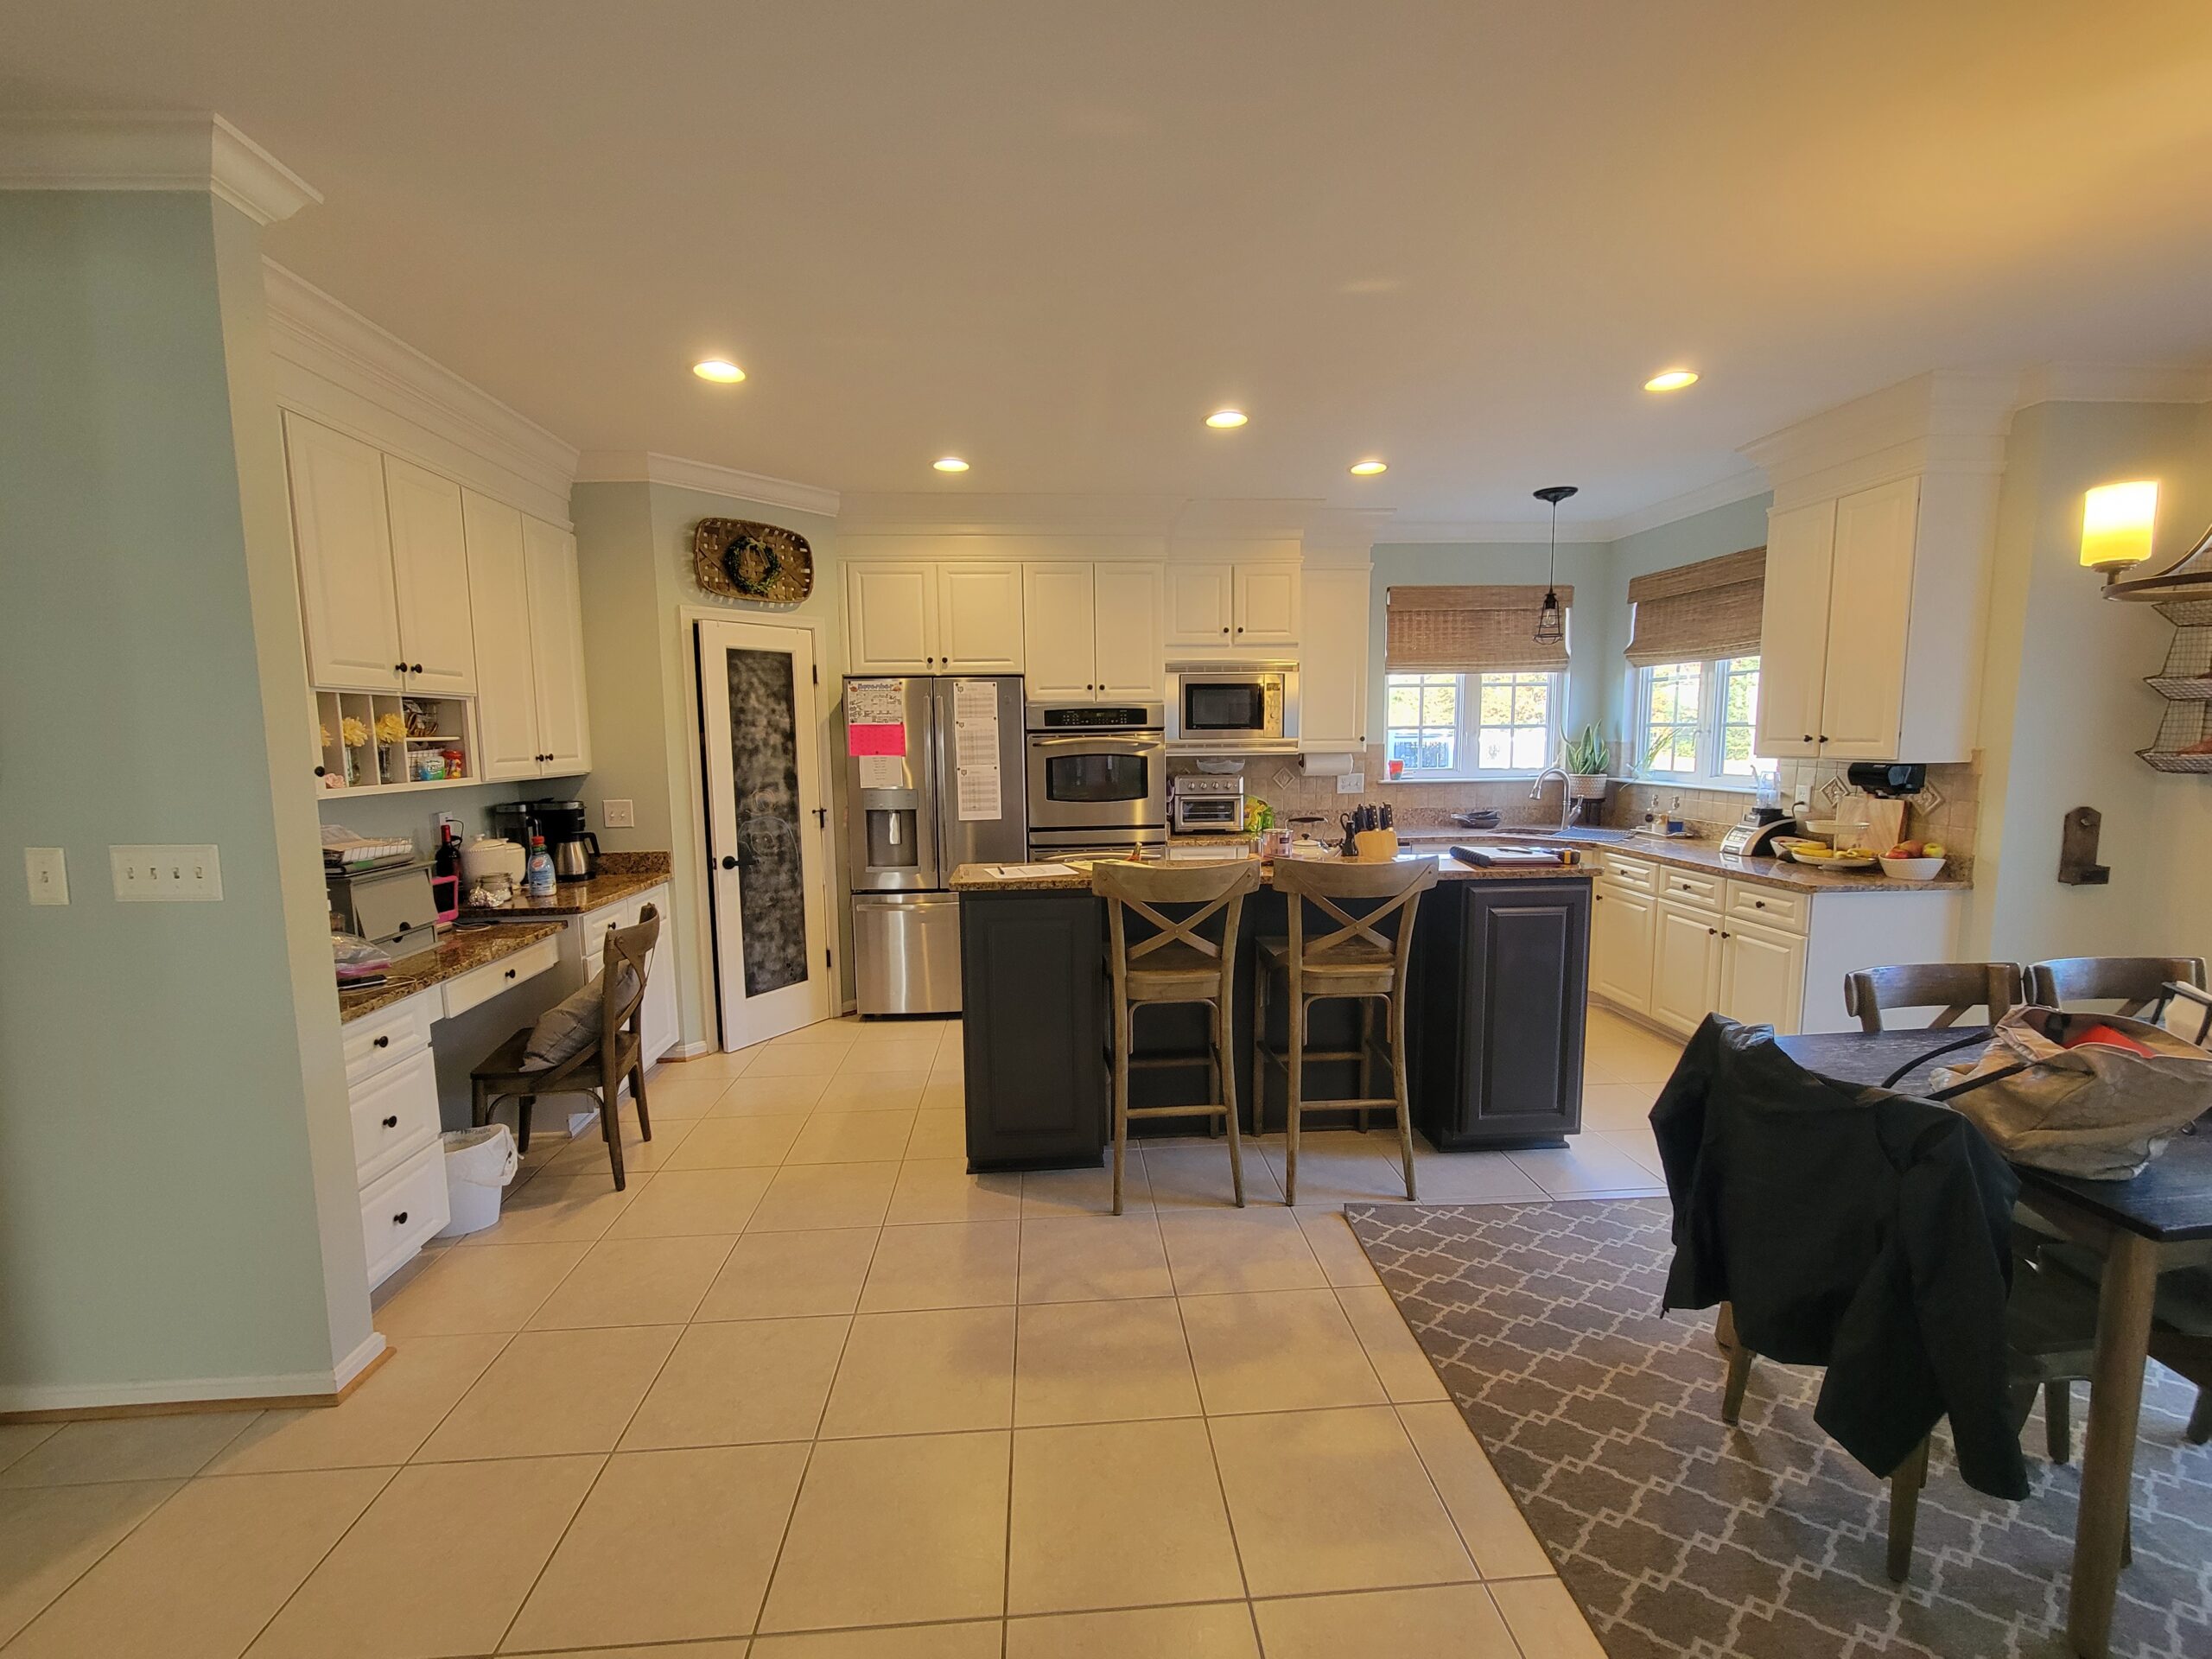 Photo of kitchen upgrade project in Reston VA by AKG Design Studio